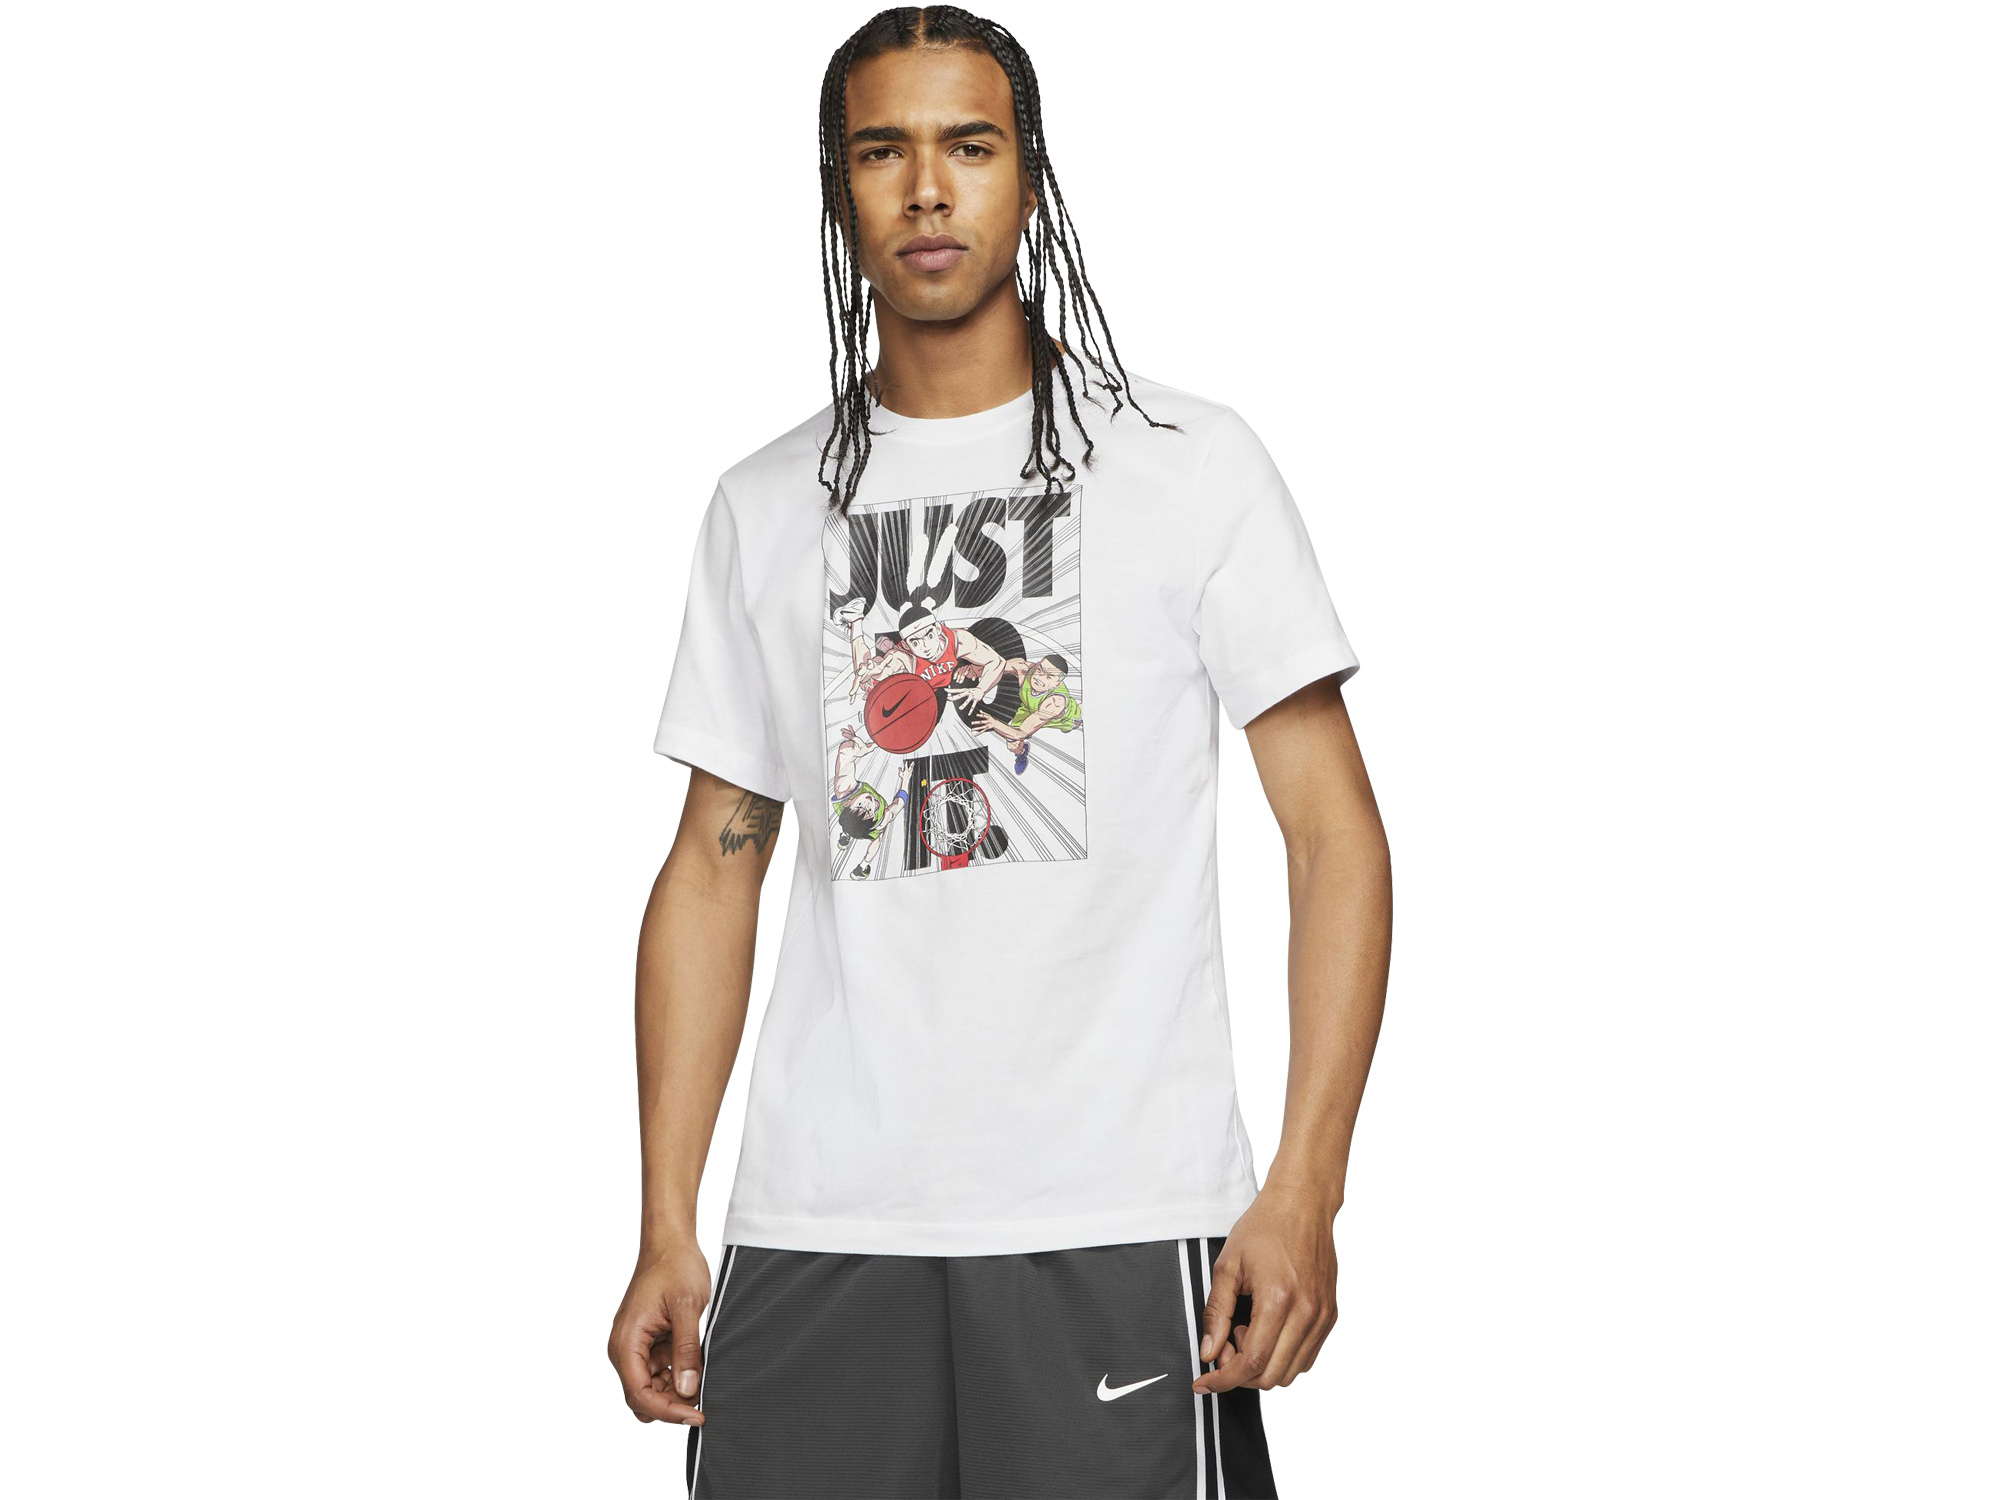 Nike Manga "Just Do It" T-Shirt